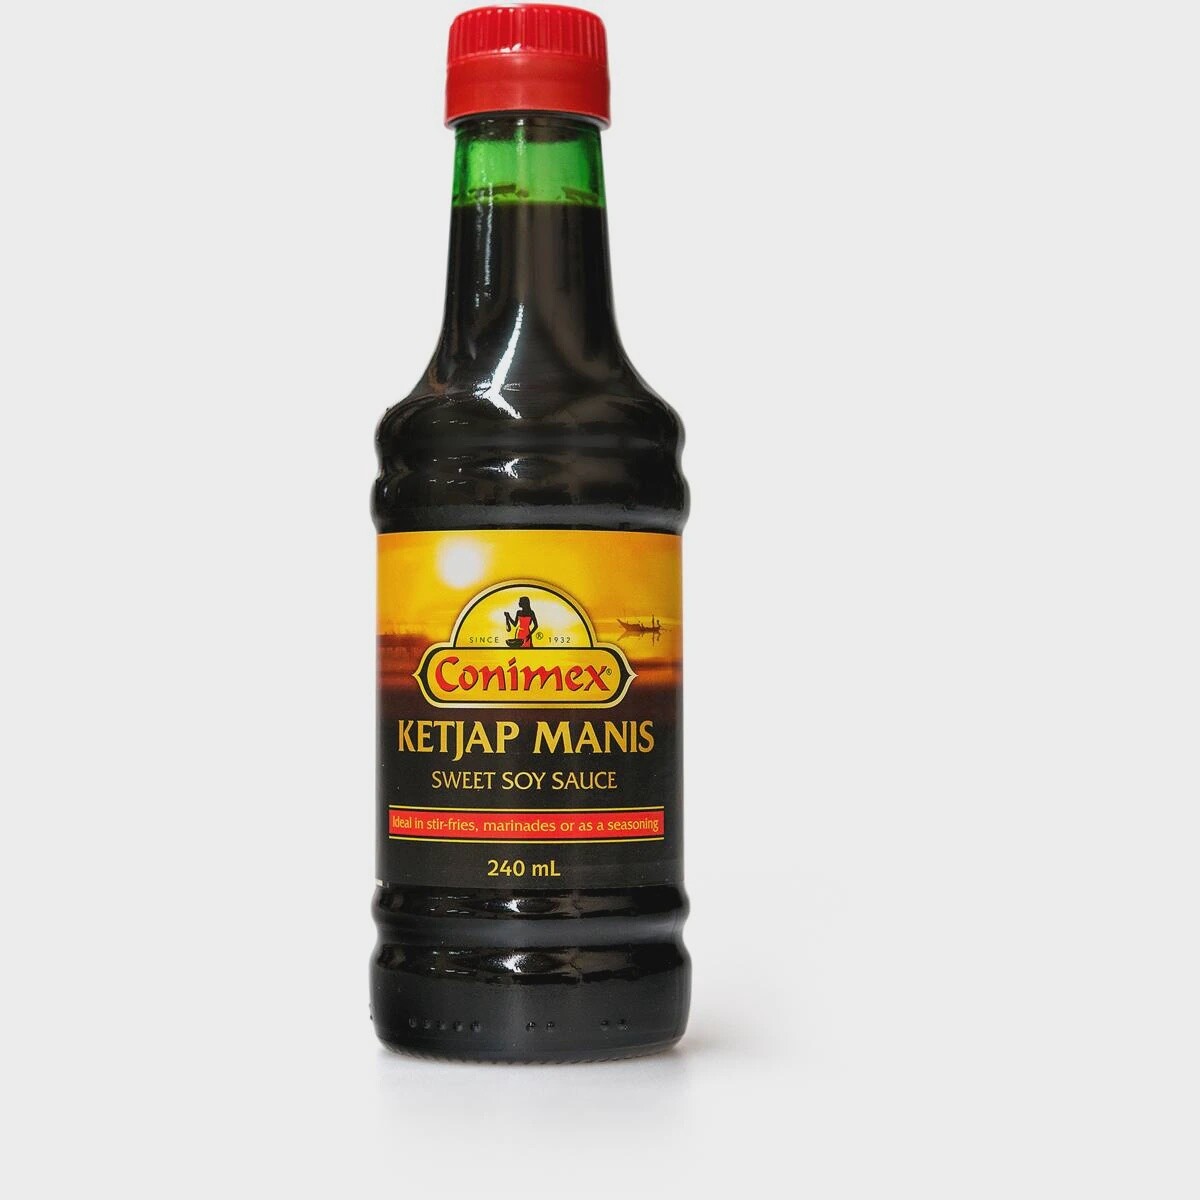 Ketjap Manis (Sweet Soy Sauce)